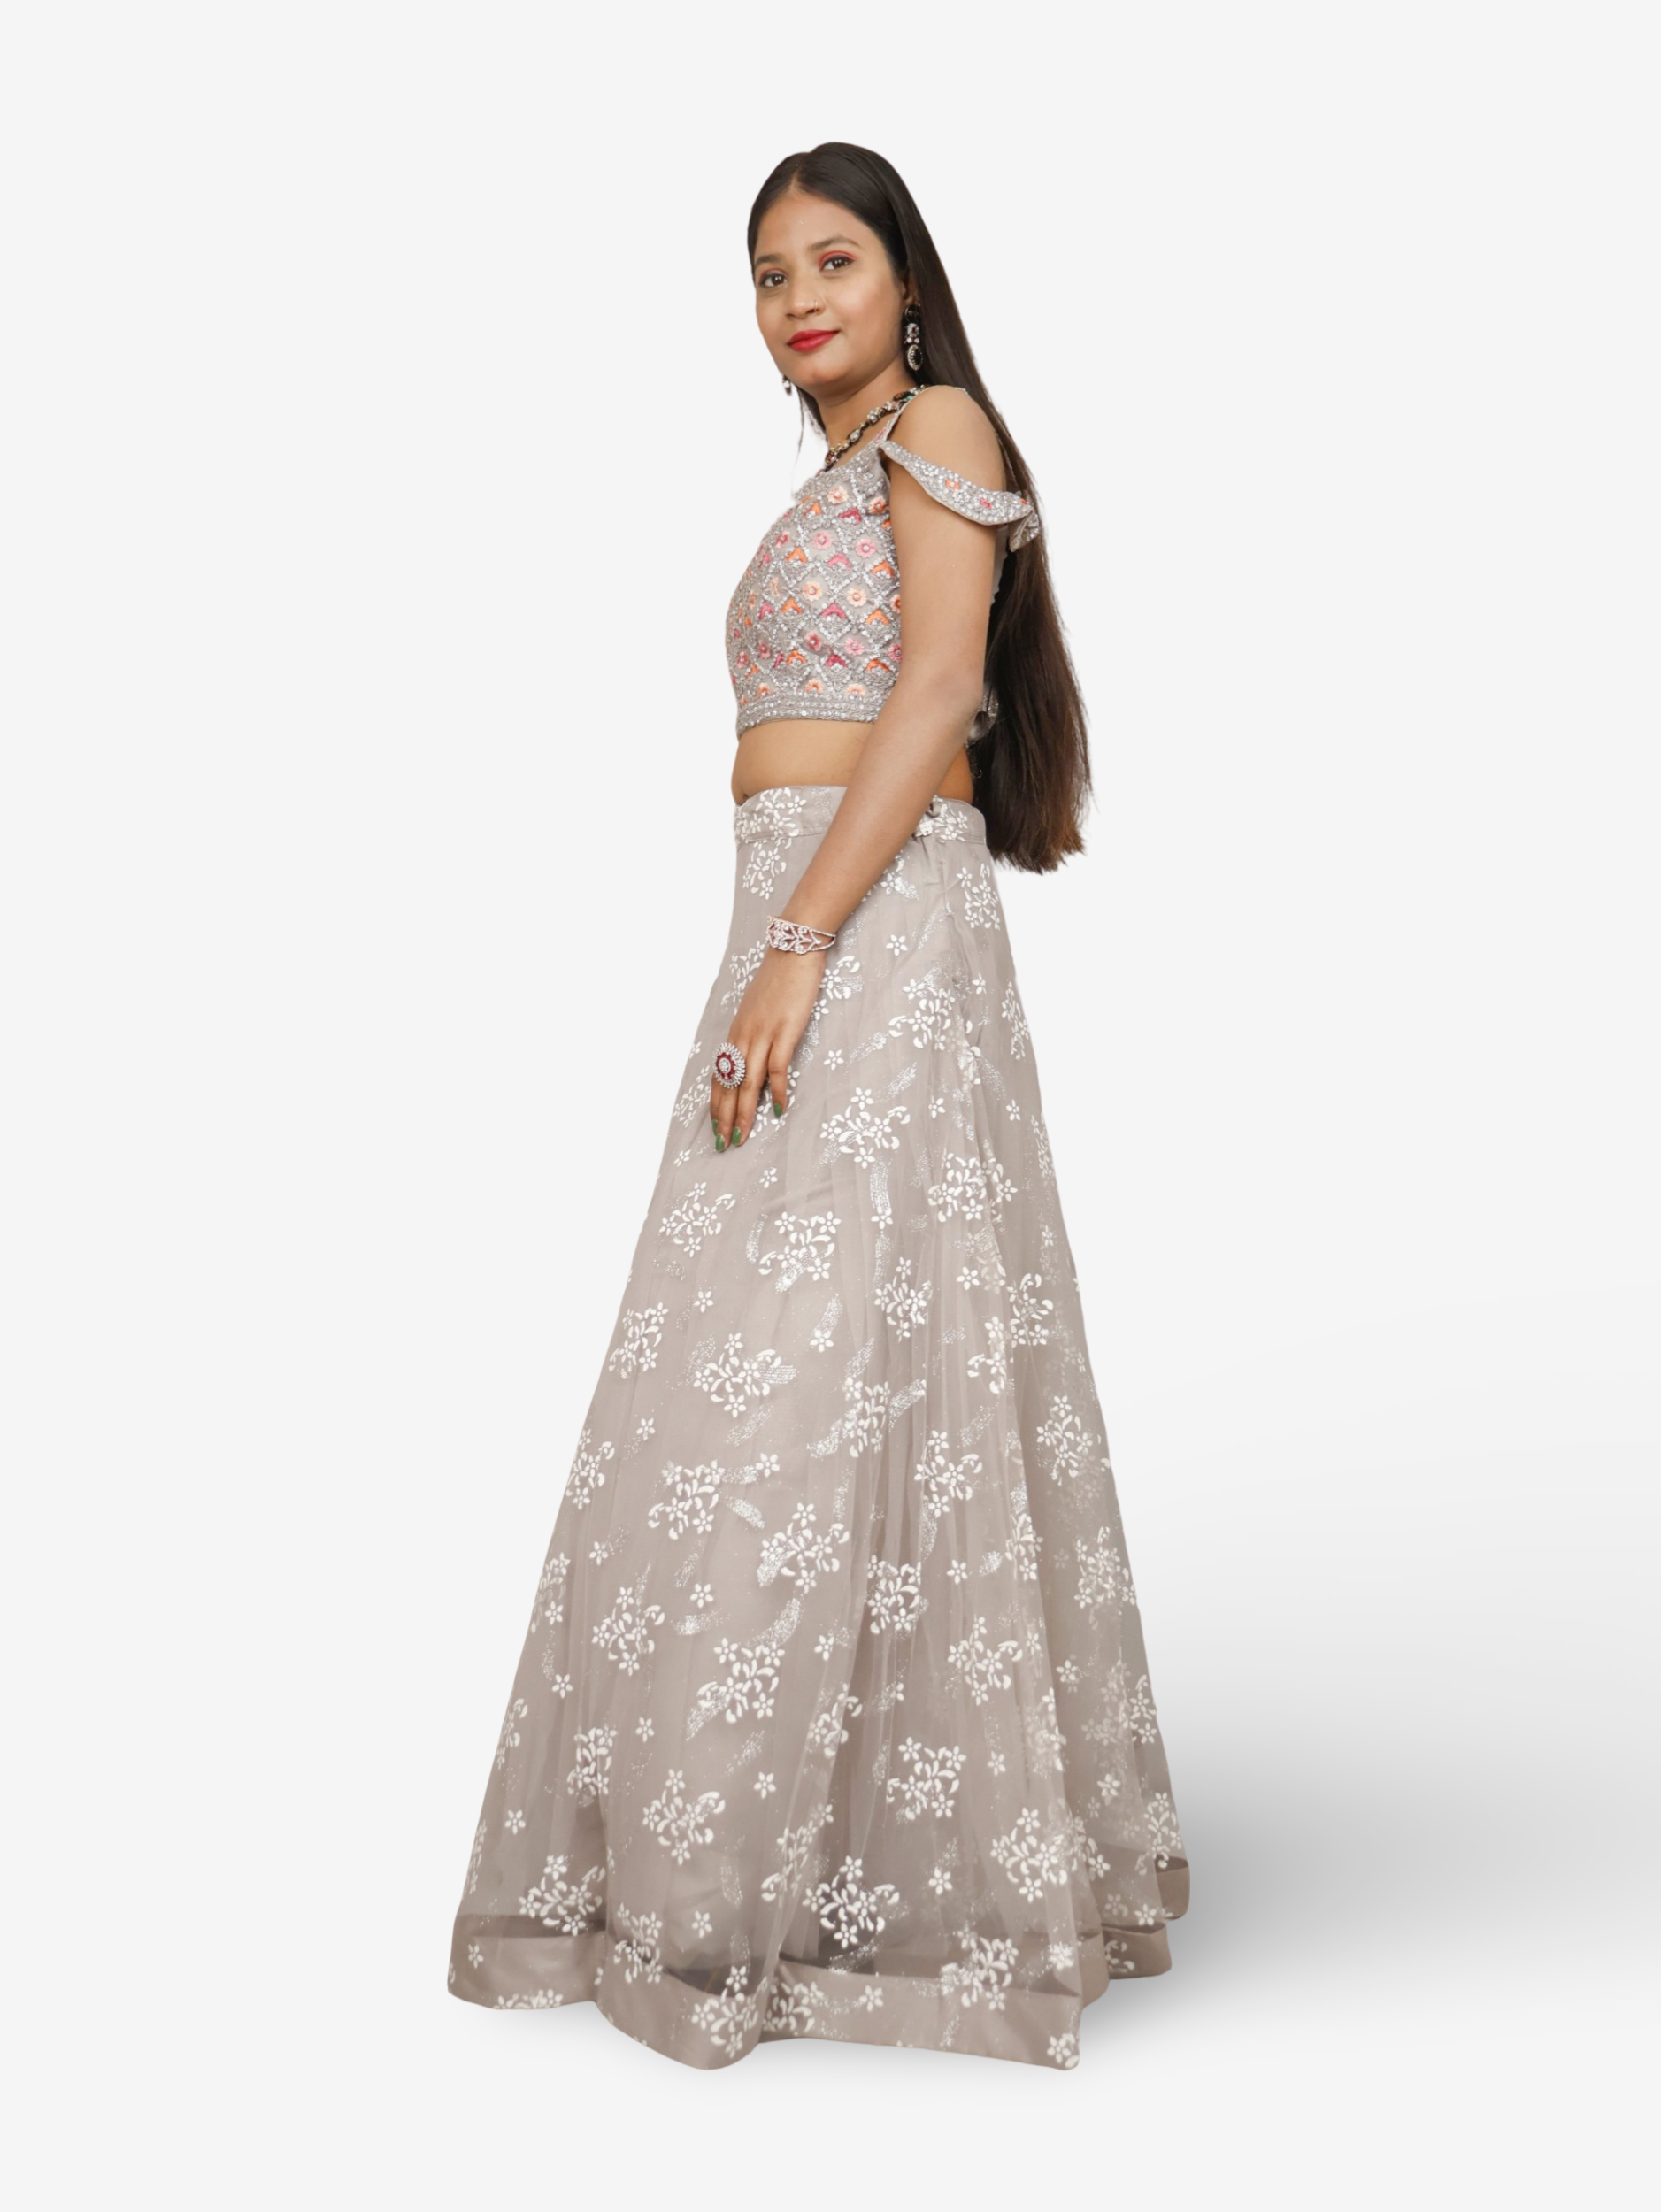 Photo of Off shoulder lehenga blouse | Mehendi outfits, Off shoulder lehenga,  Indian attire